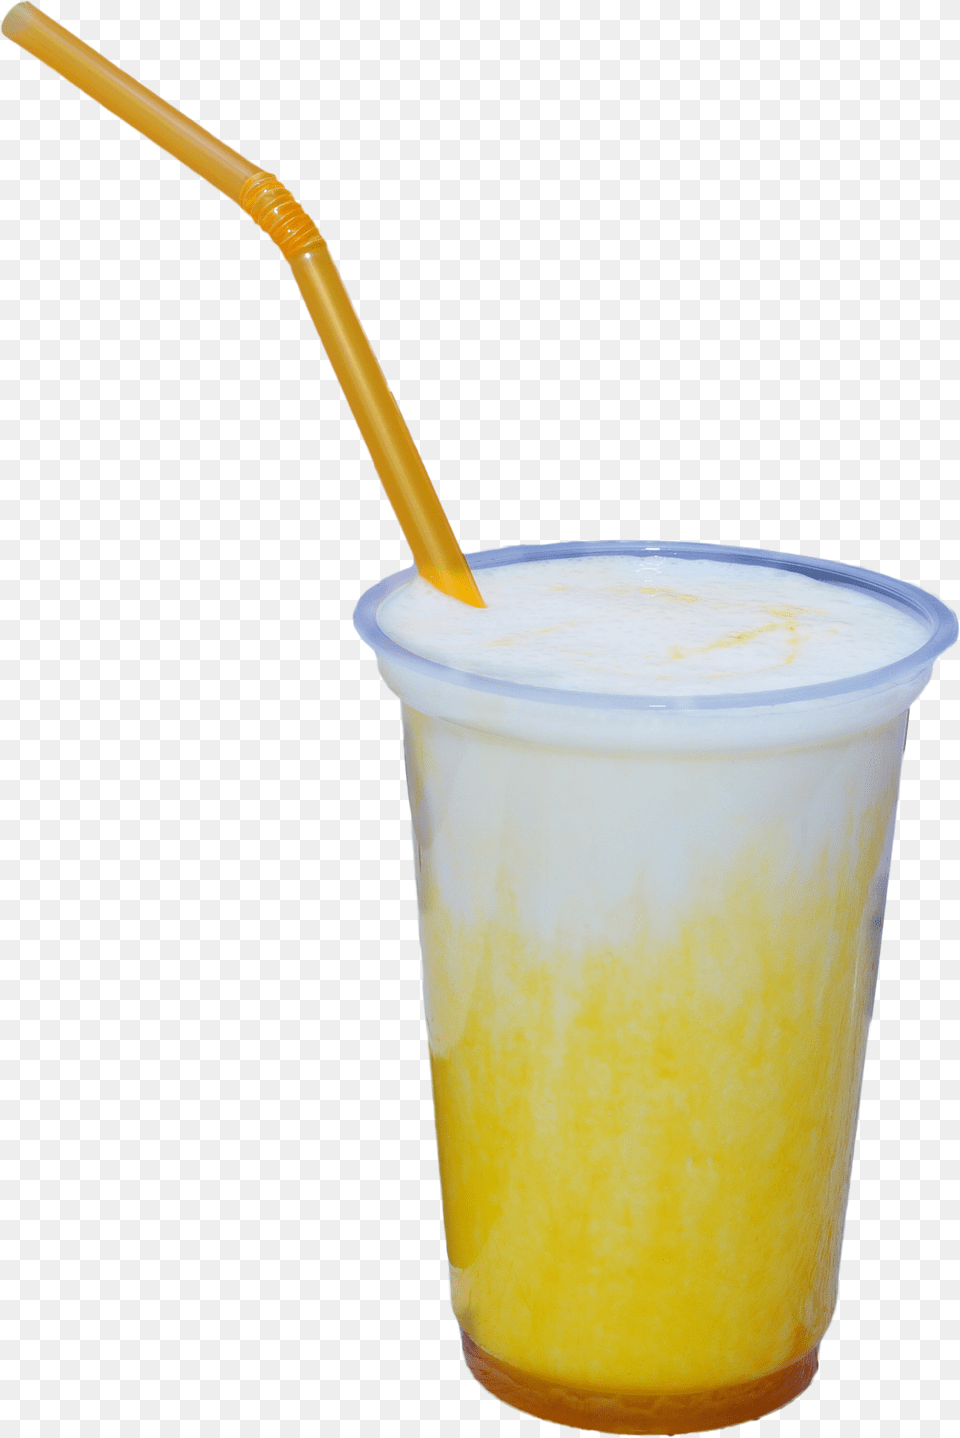 Mango Cold Drink Shake Glass Frozen Carbonated Beverage, Juice, Smoke Pipe, Dessert, Food Free Transparent Png